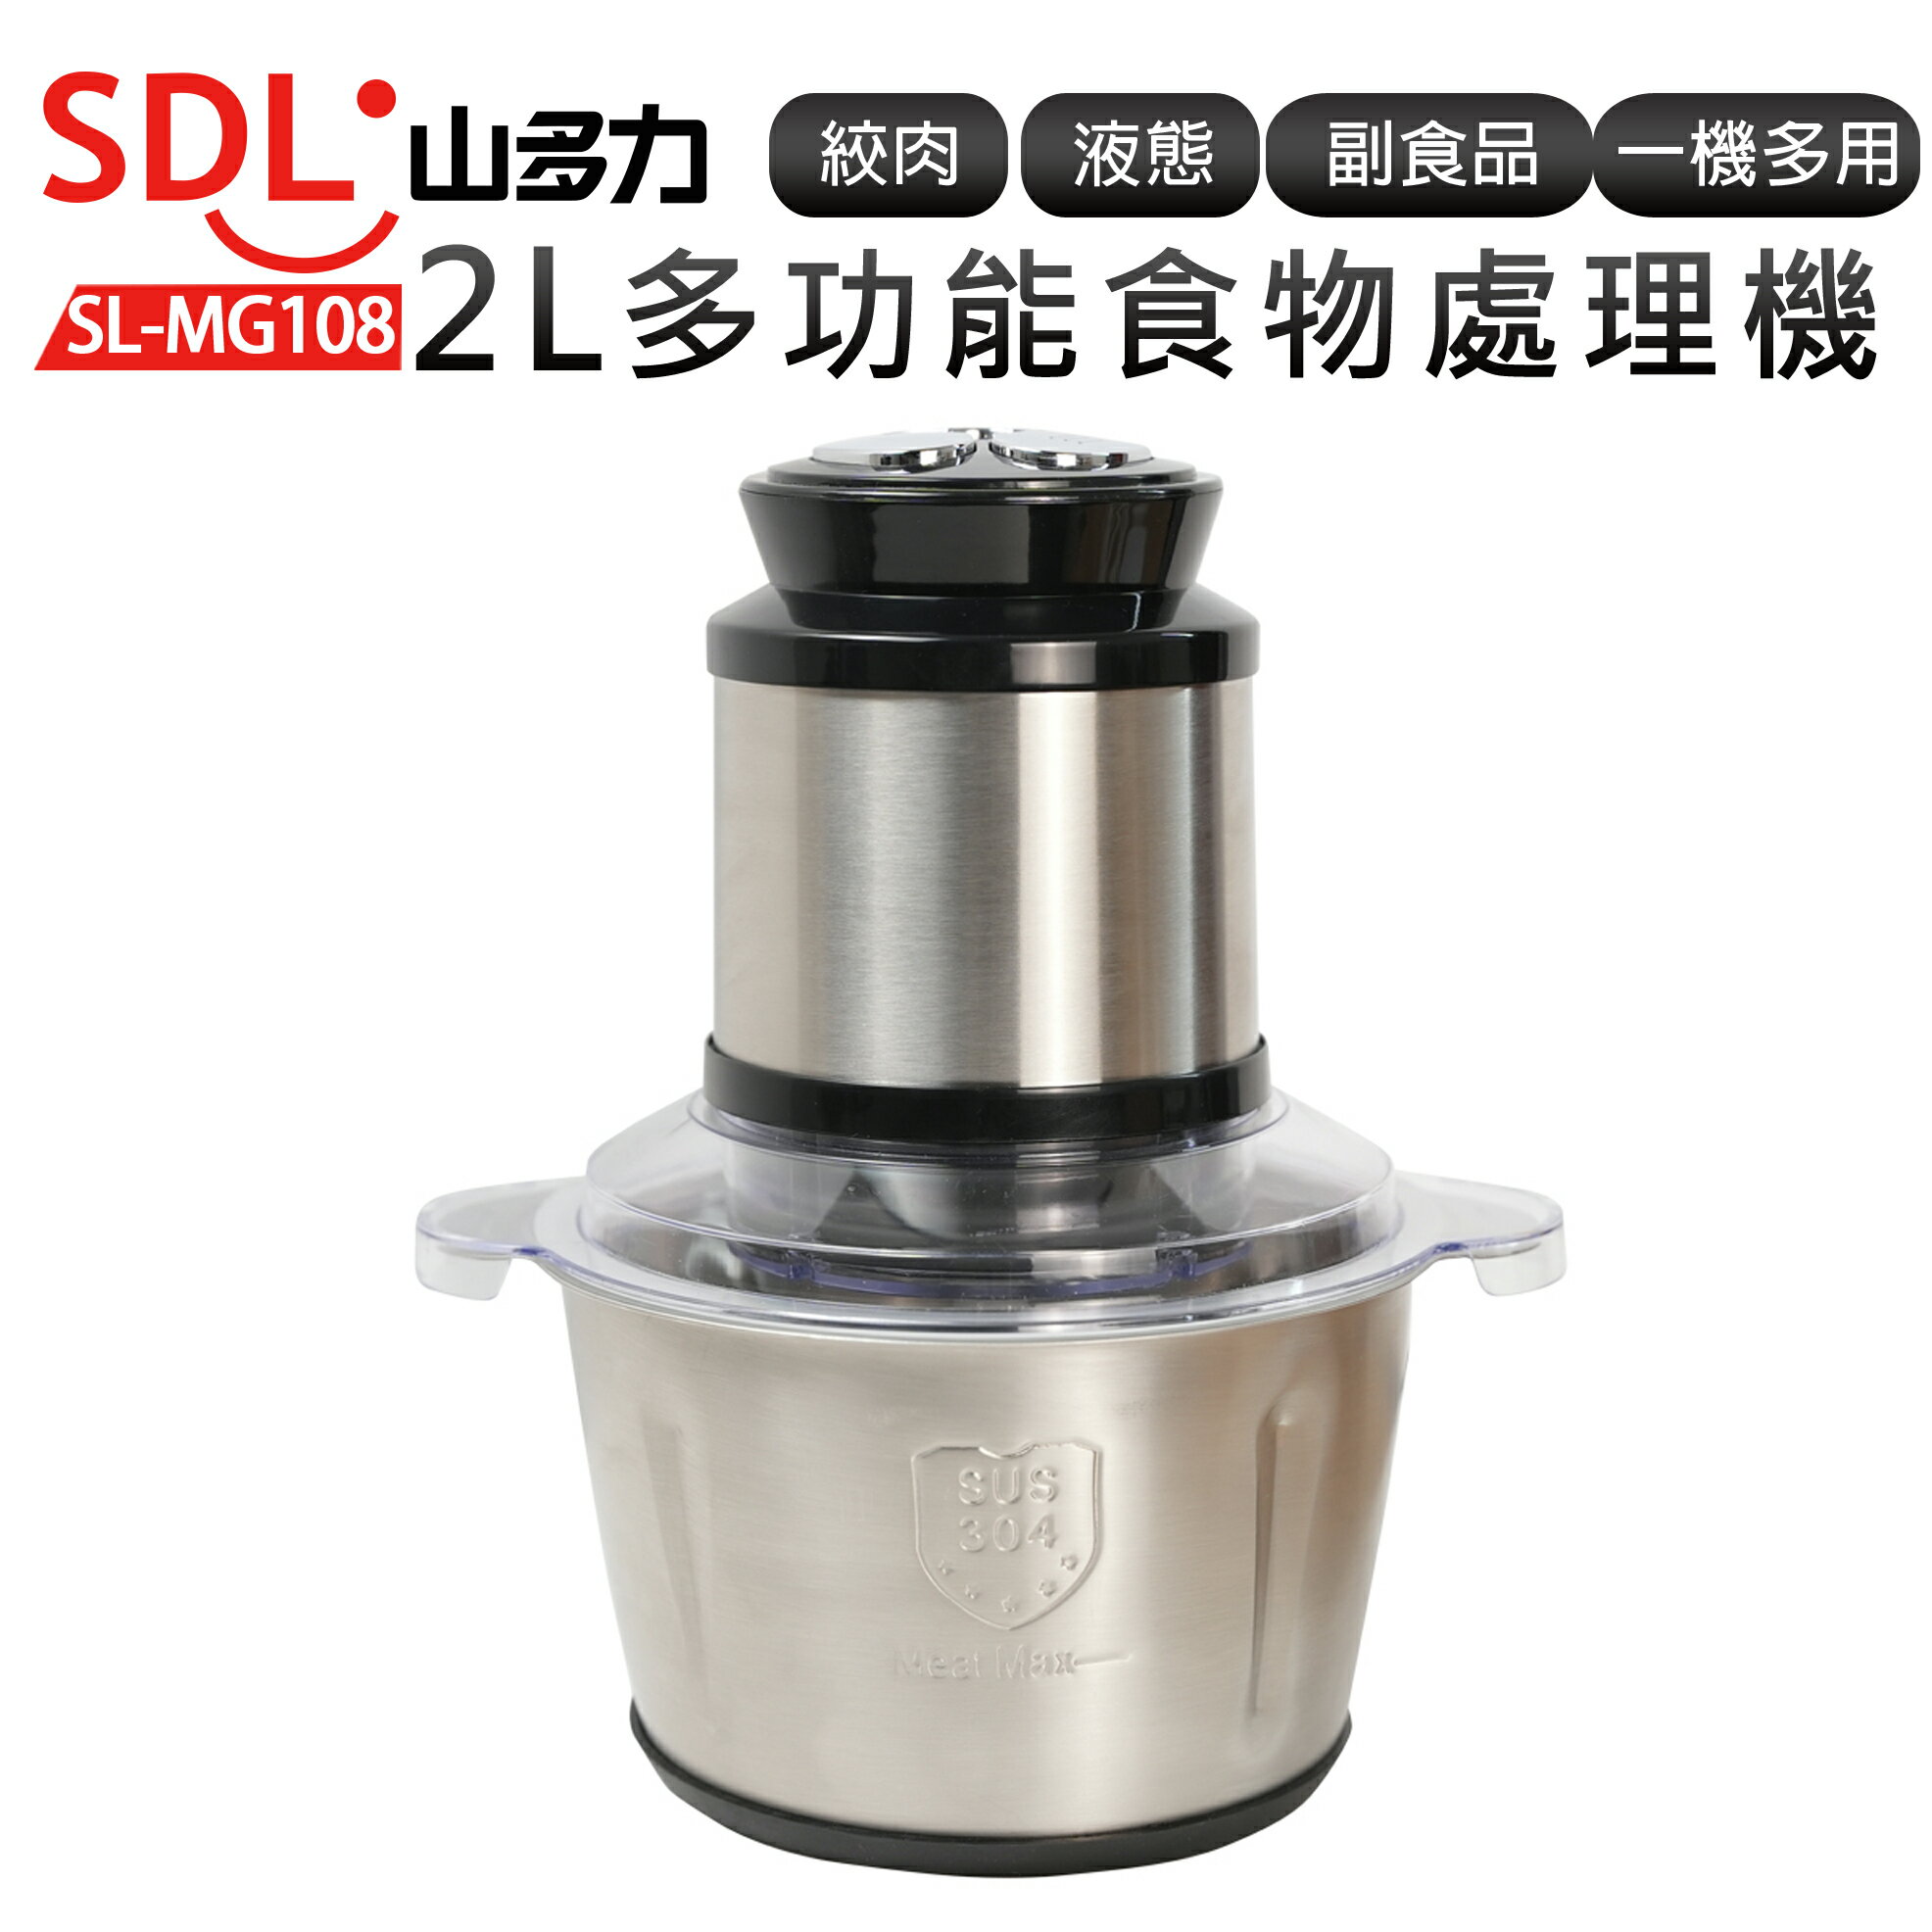 【SDL 山多力】多功能食物處理機(SL-MG108)